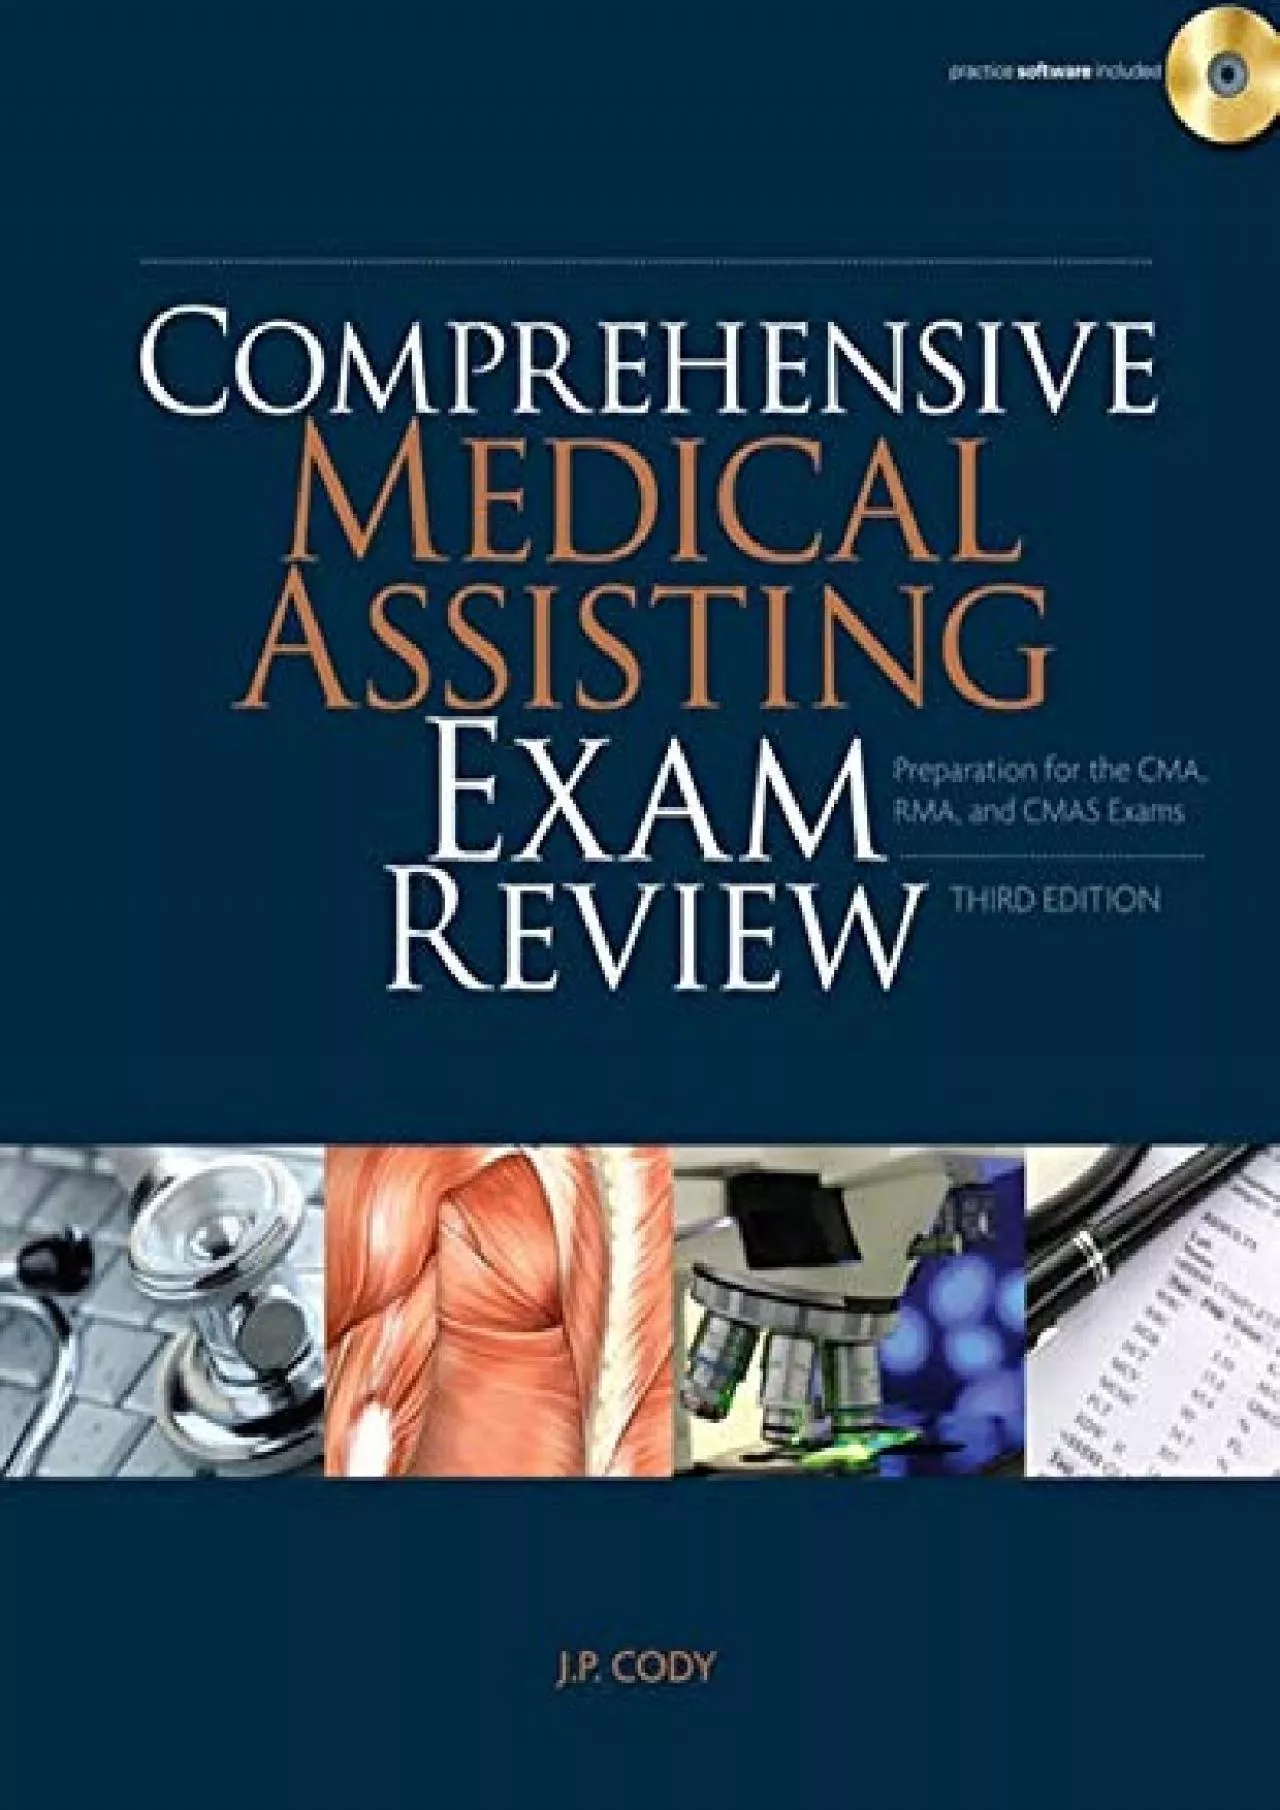 (EBOOK)-Comprehensive Medical Assisting Exam Review: Preparation for the CMA, RMA and